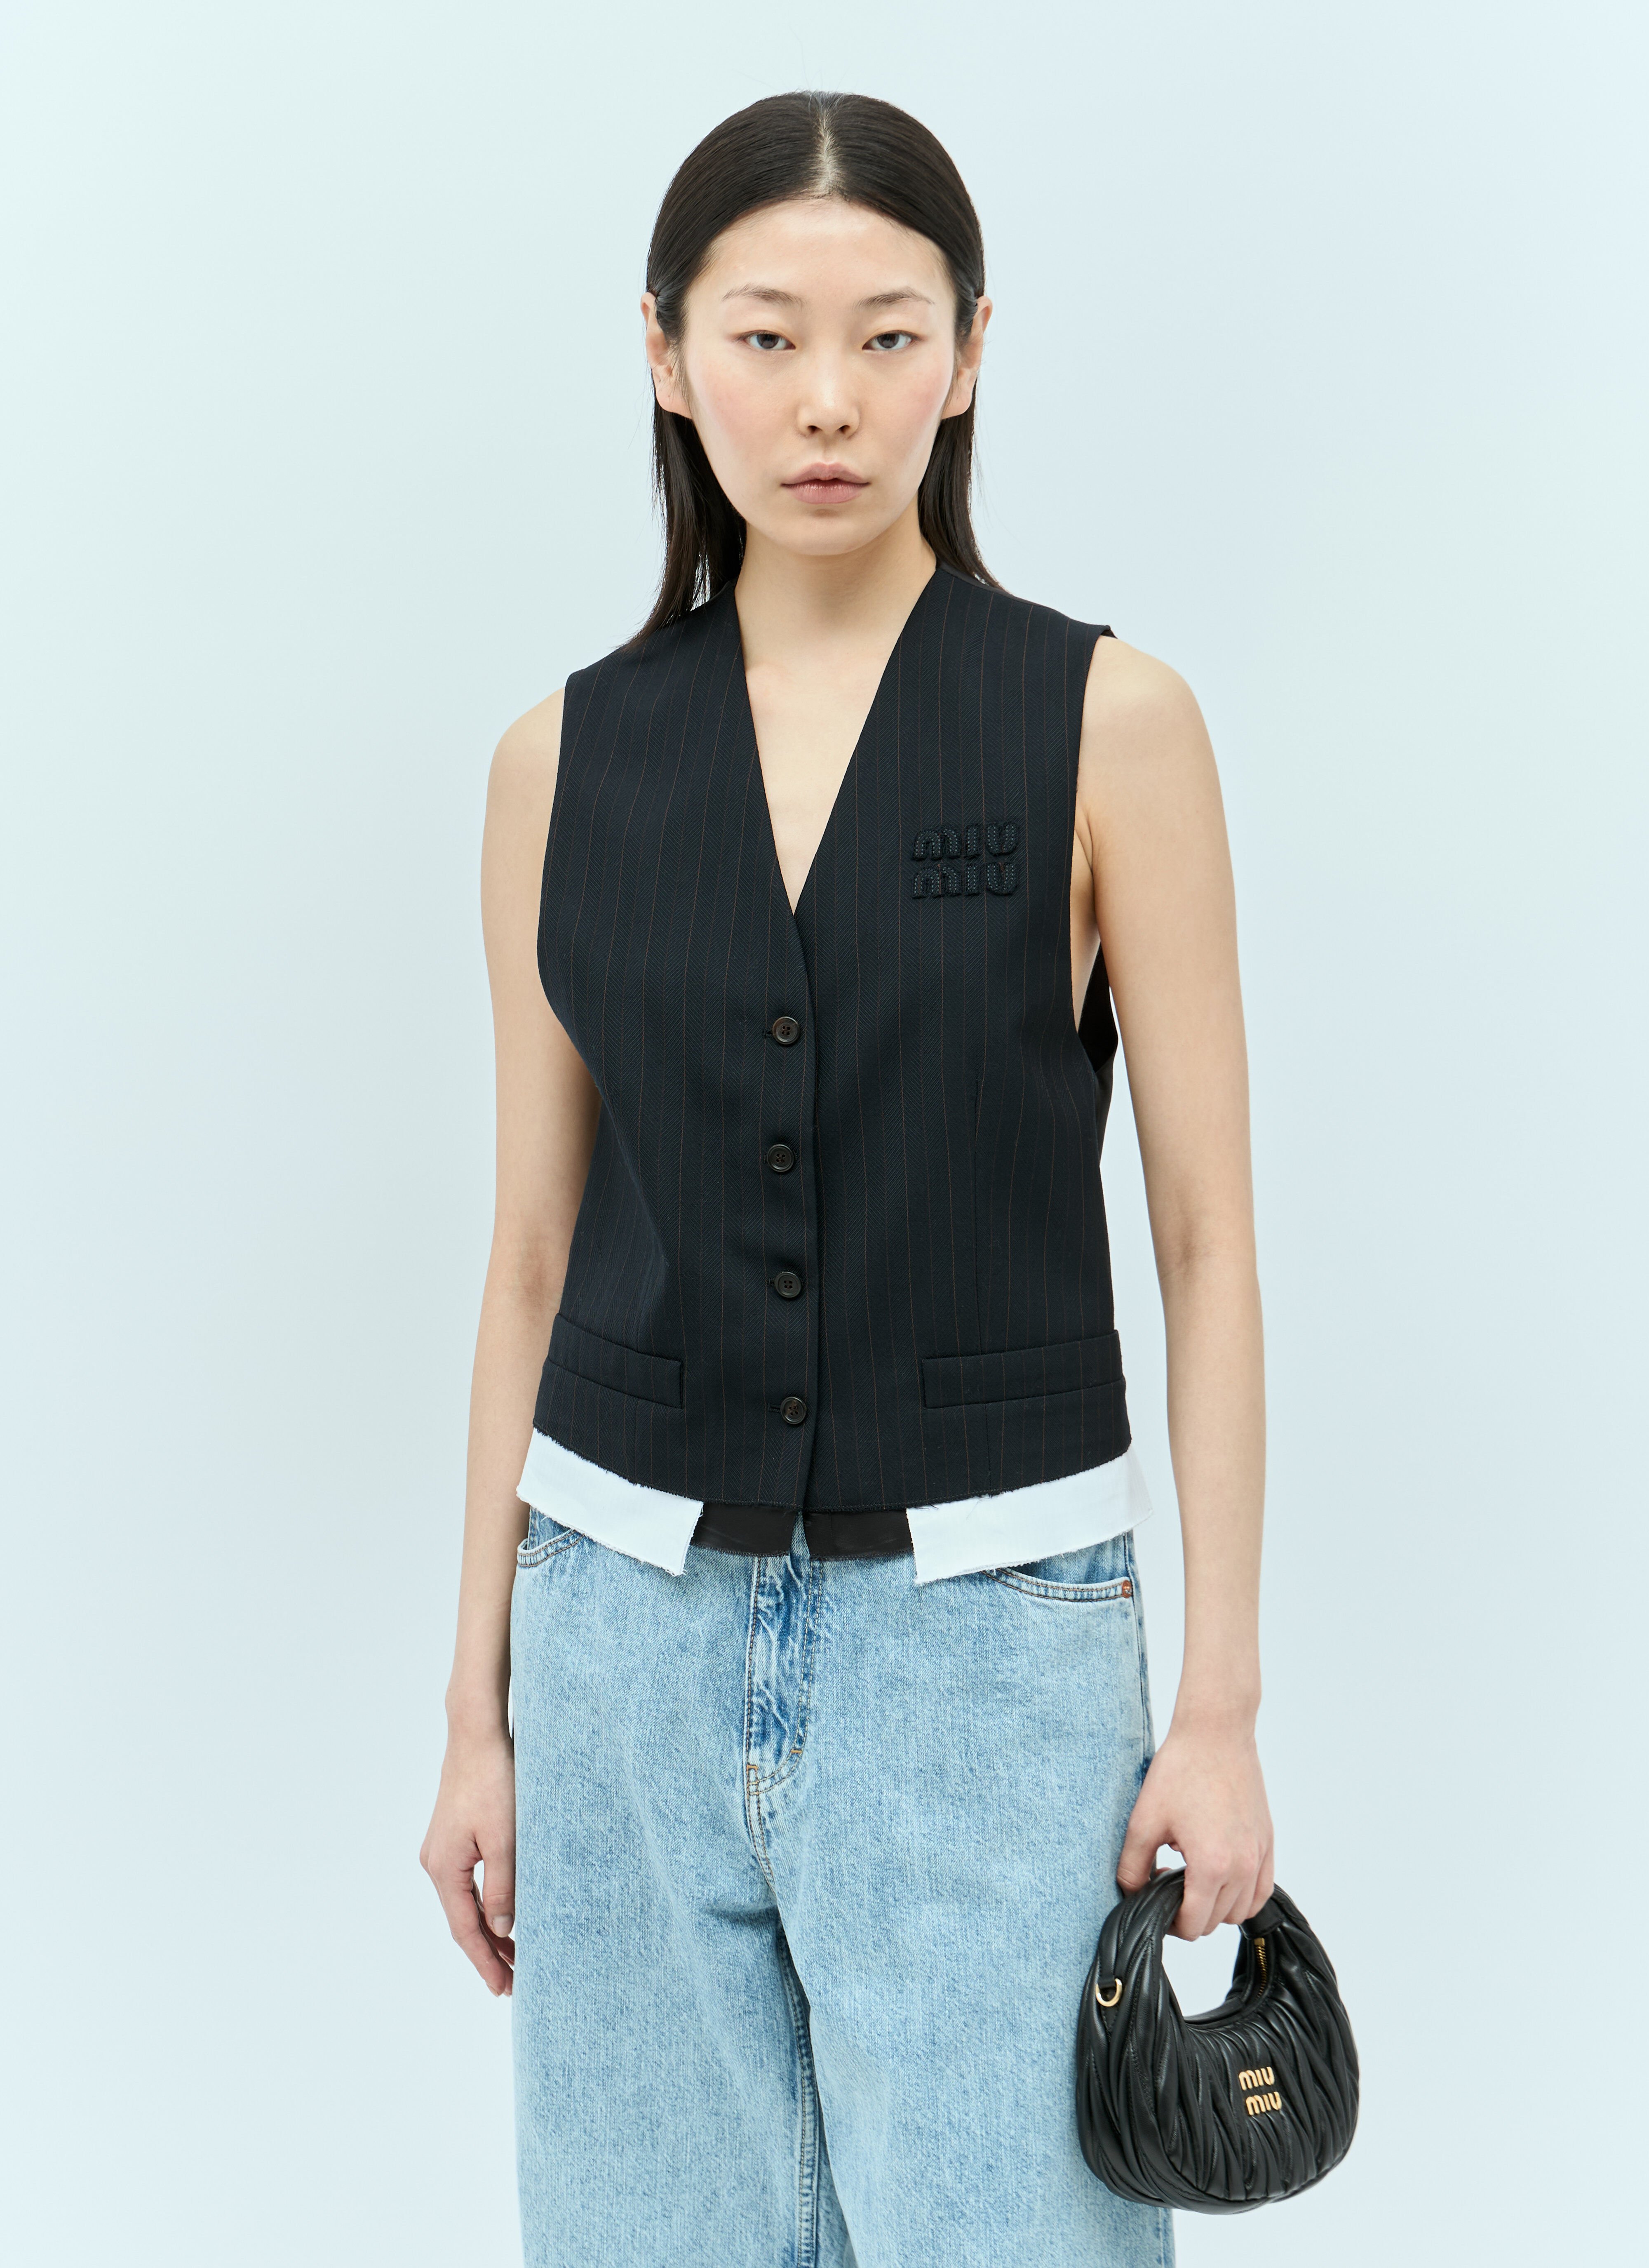 Miu Miu Single-Breasted Pinstripe Vest Black miu0257002